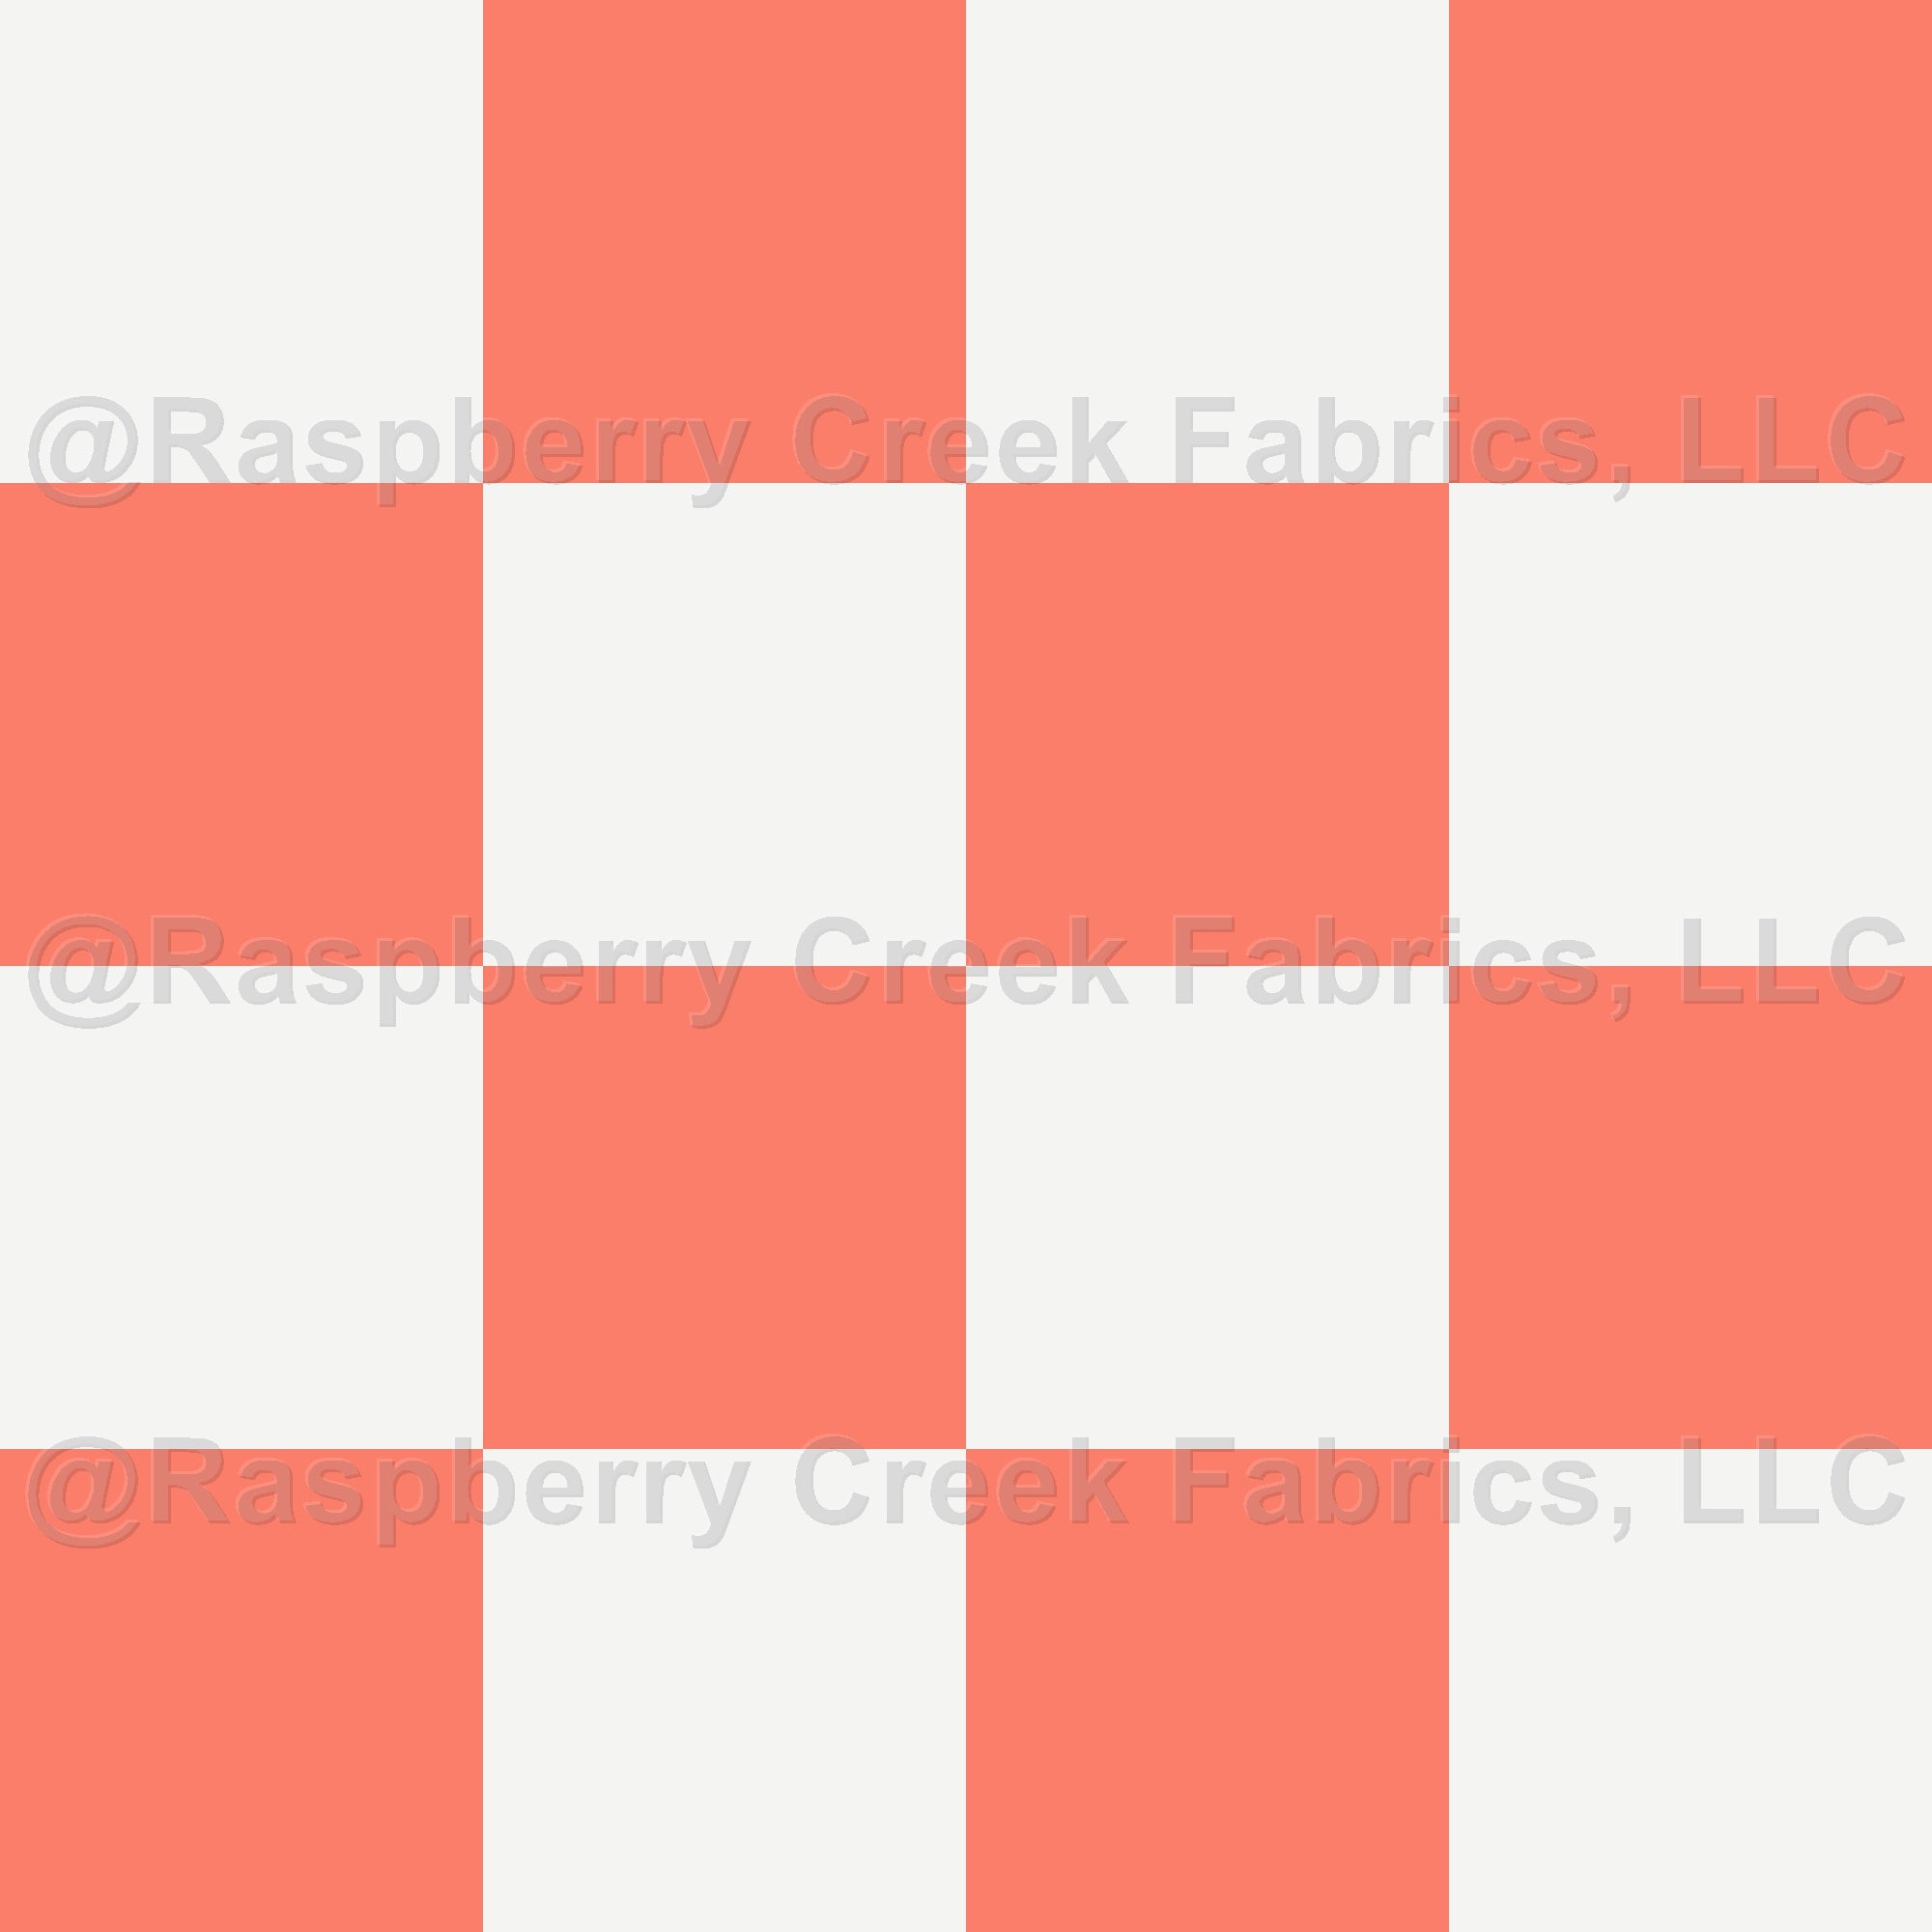 Coral Checkboard Fabric, Raspberry Creek Fabrics, watermarked